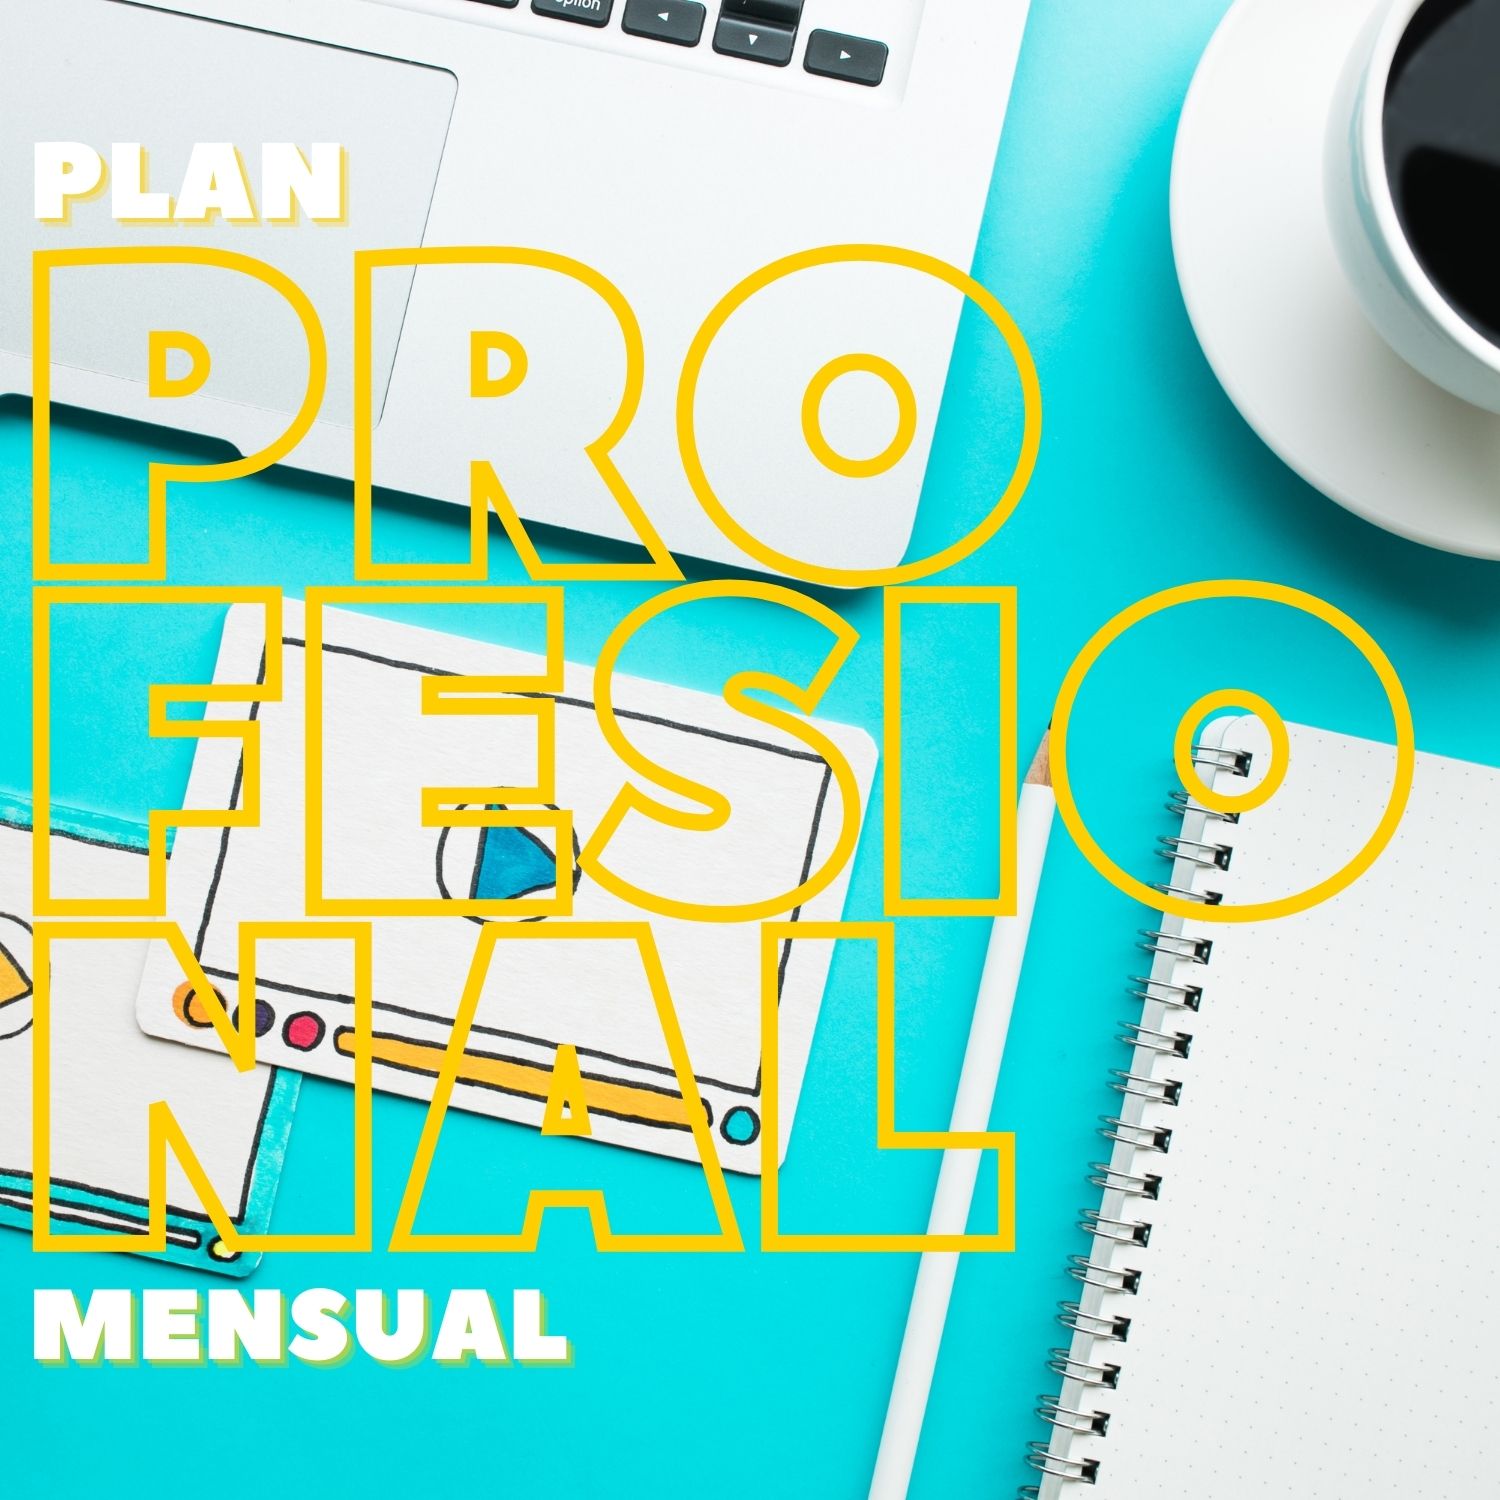 Plan Profesional Mensual